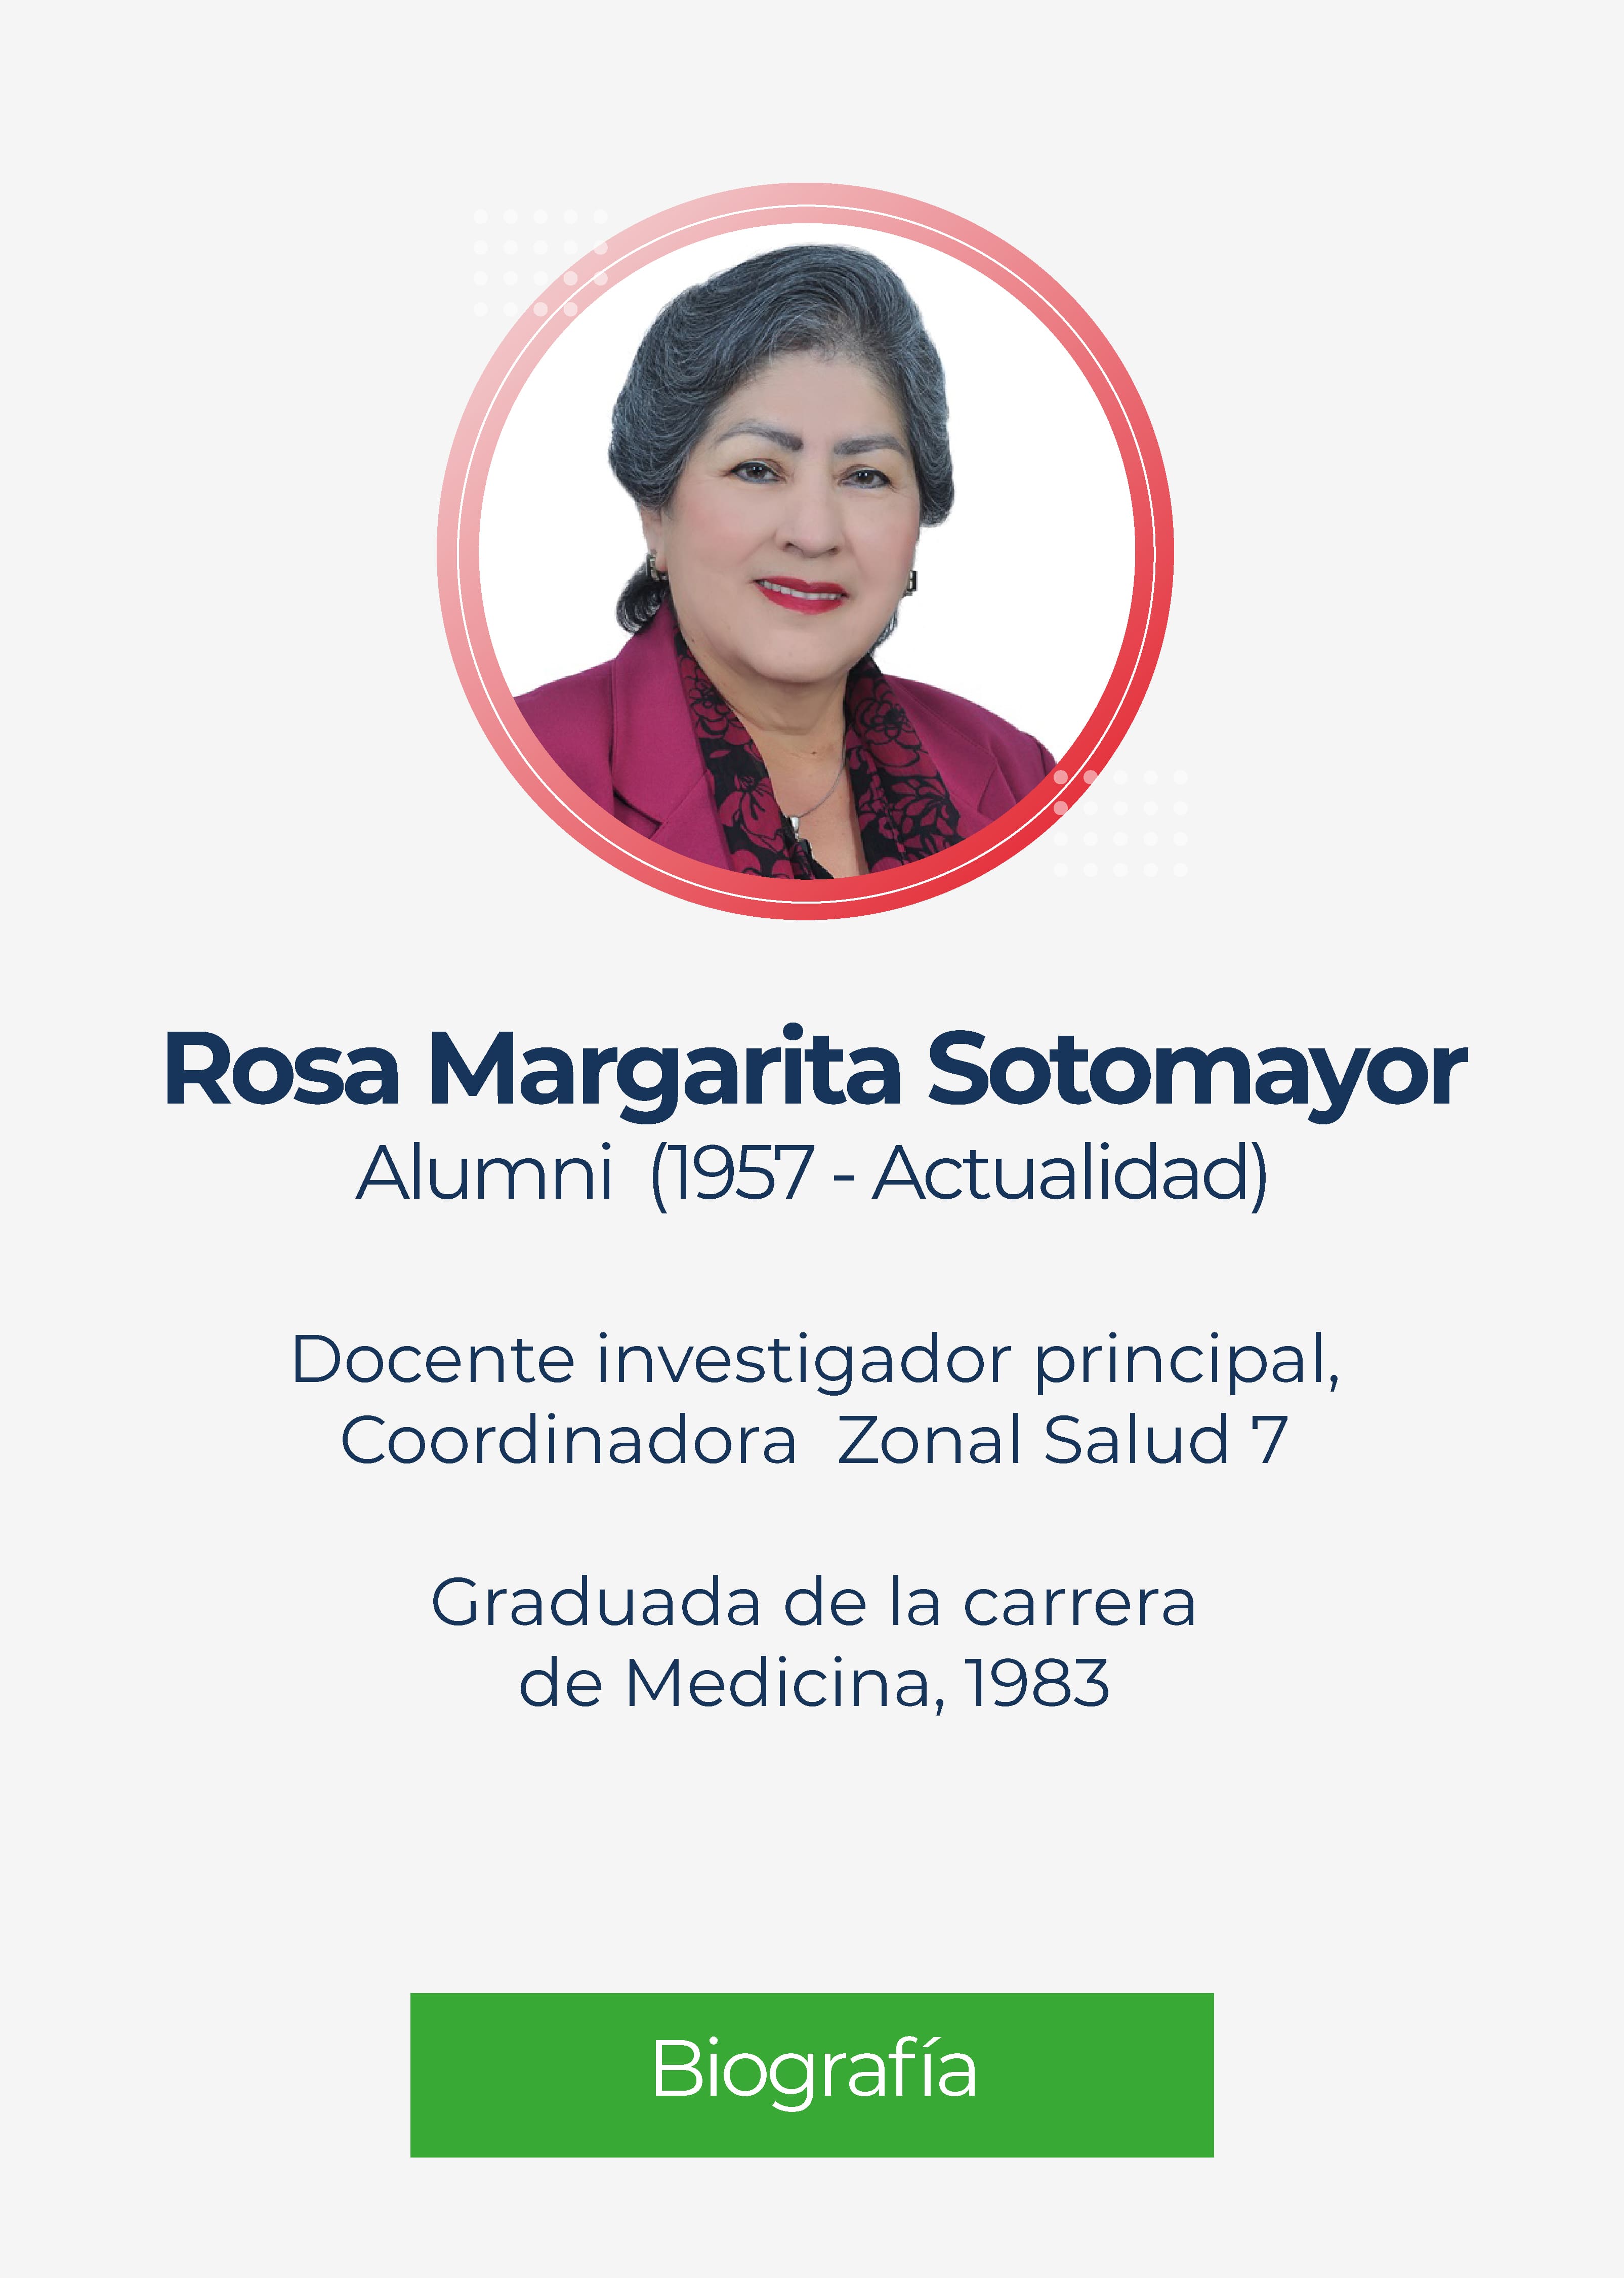 Rosa Margarita Sotomayor Ojeda